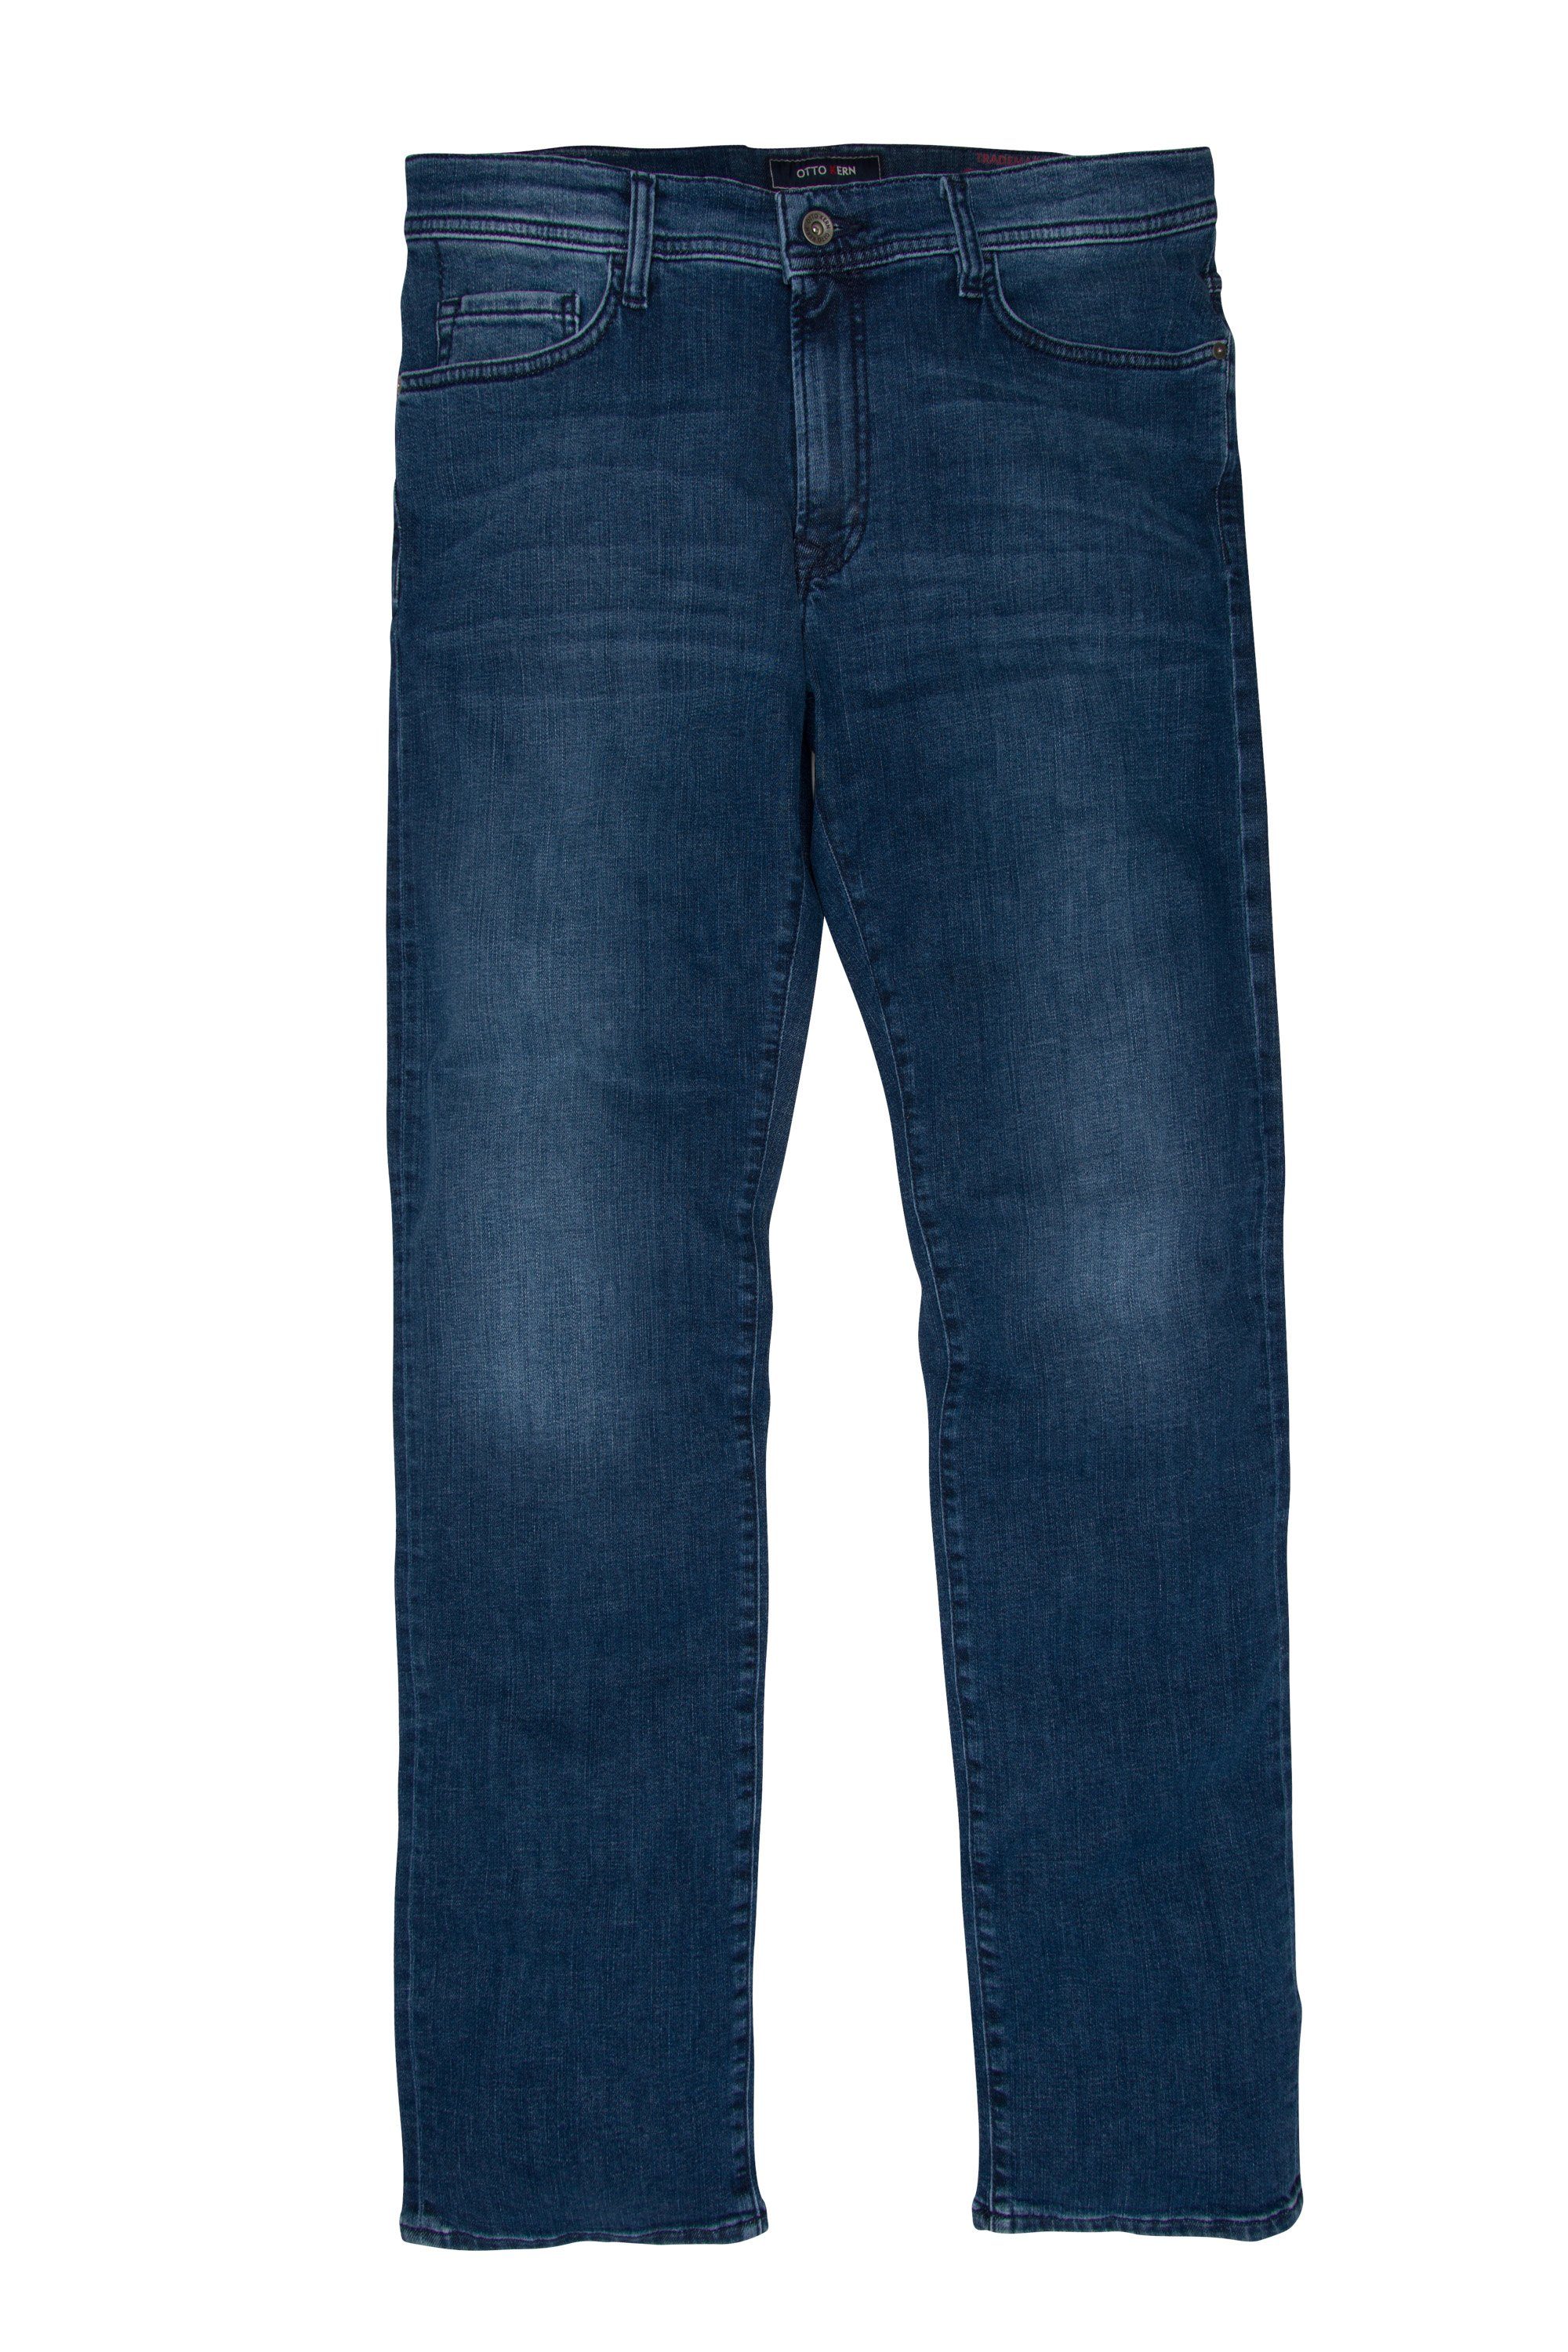  Kern 5-Pocket-Jeans OTTO KERN JOHN medium blue used buffies 67042 6810.6824 - Dynamic